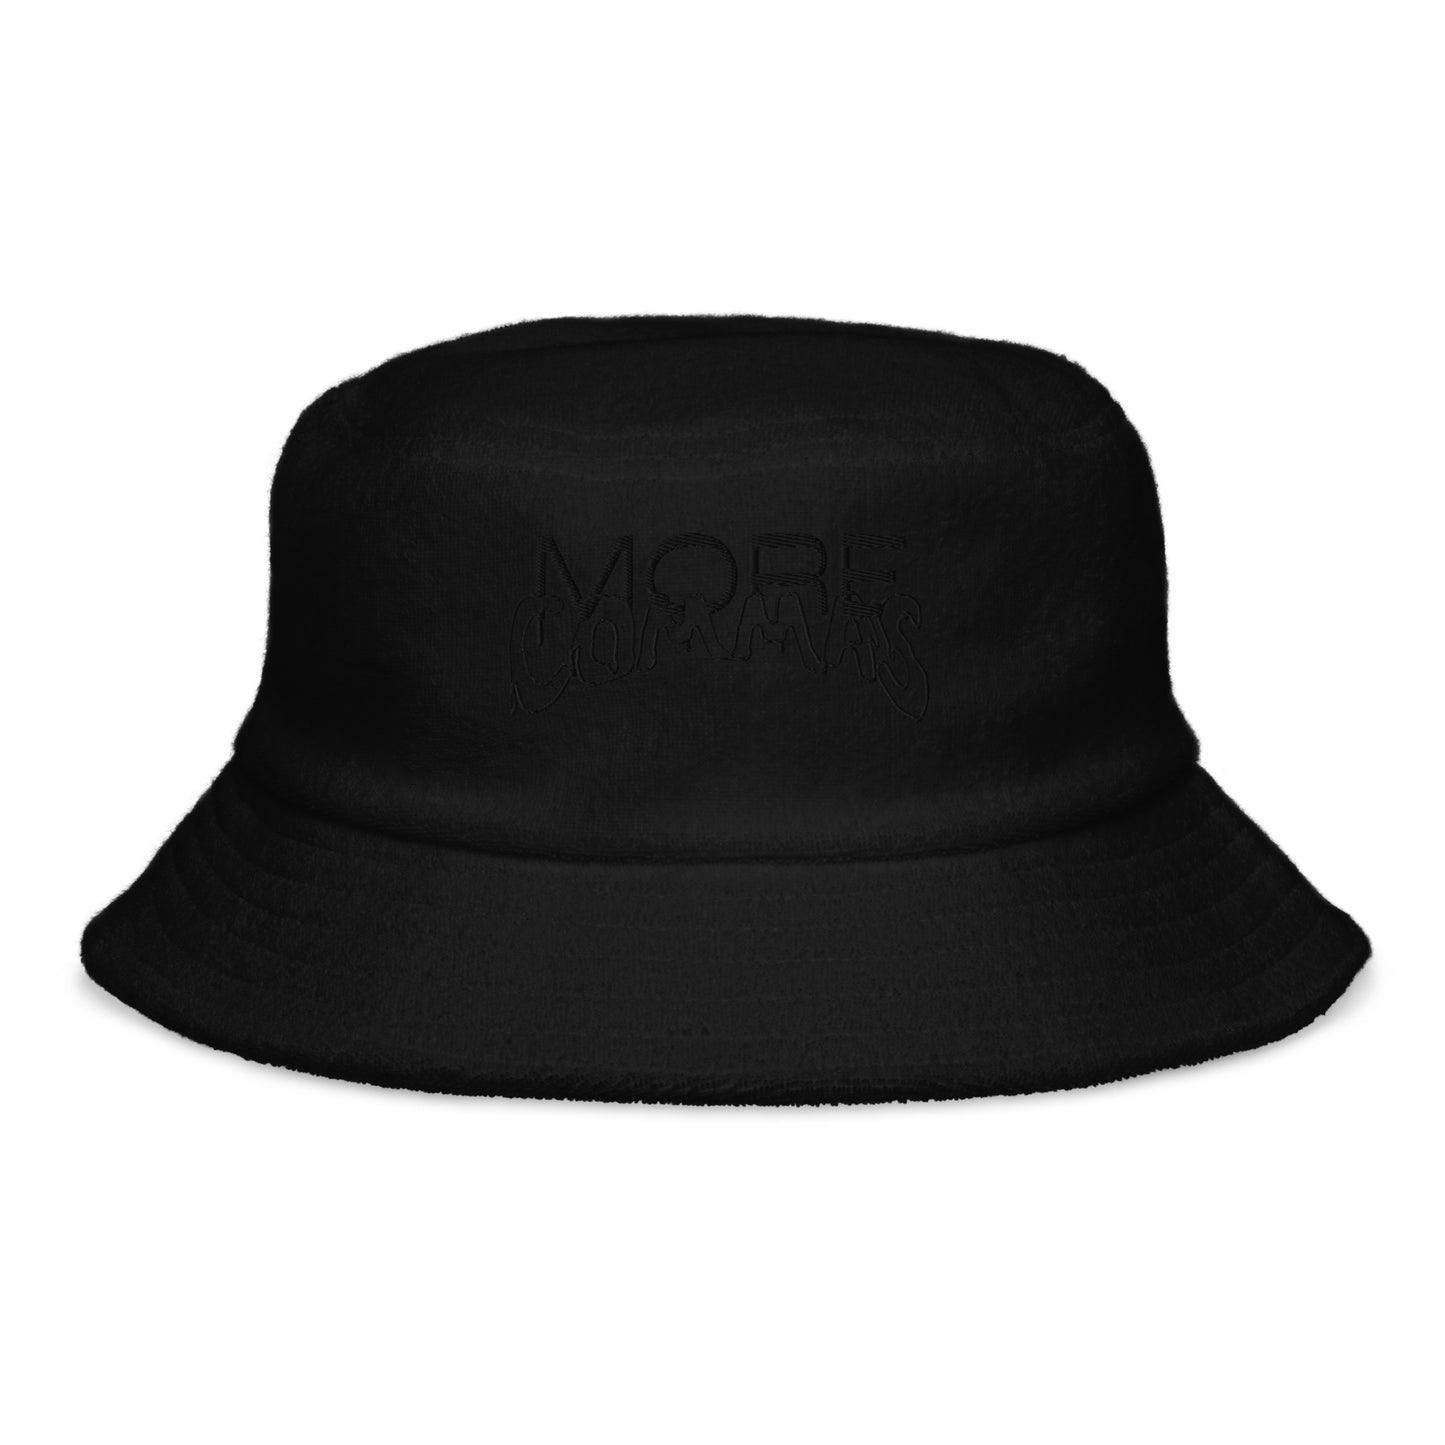 MORE COMMAS TERRY CLOTH BUCKET HAT